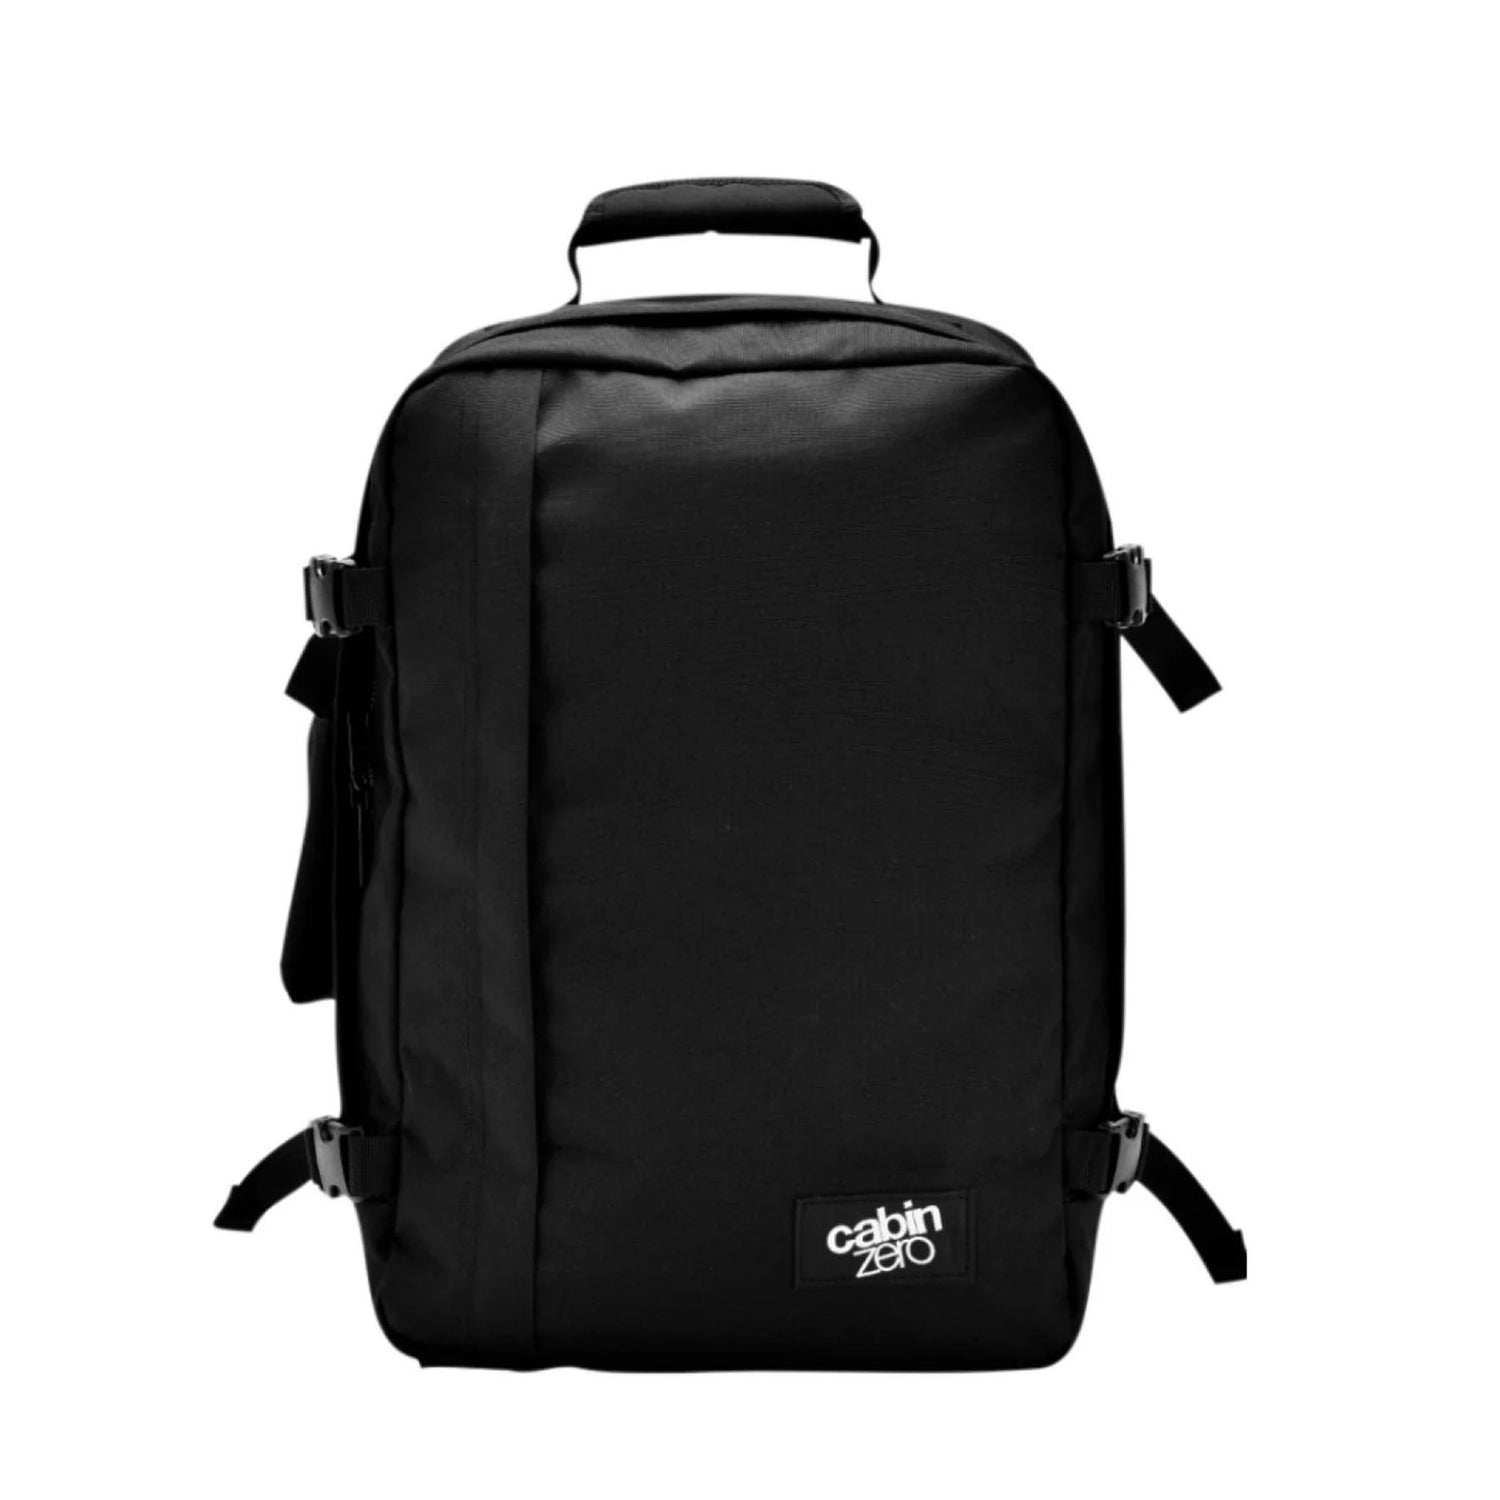 Cabin Zero Classic Backpack 36L 